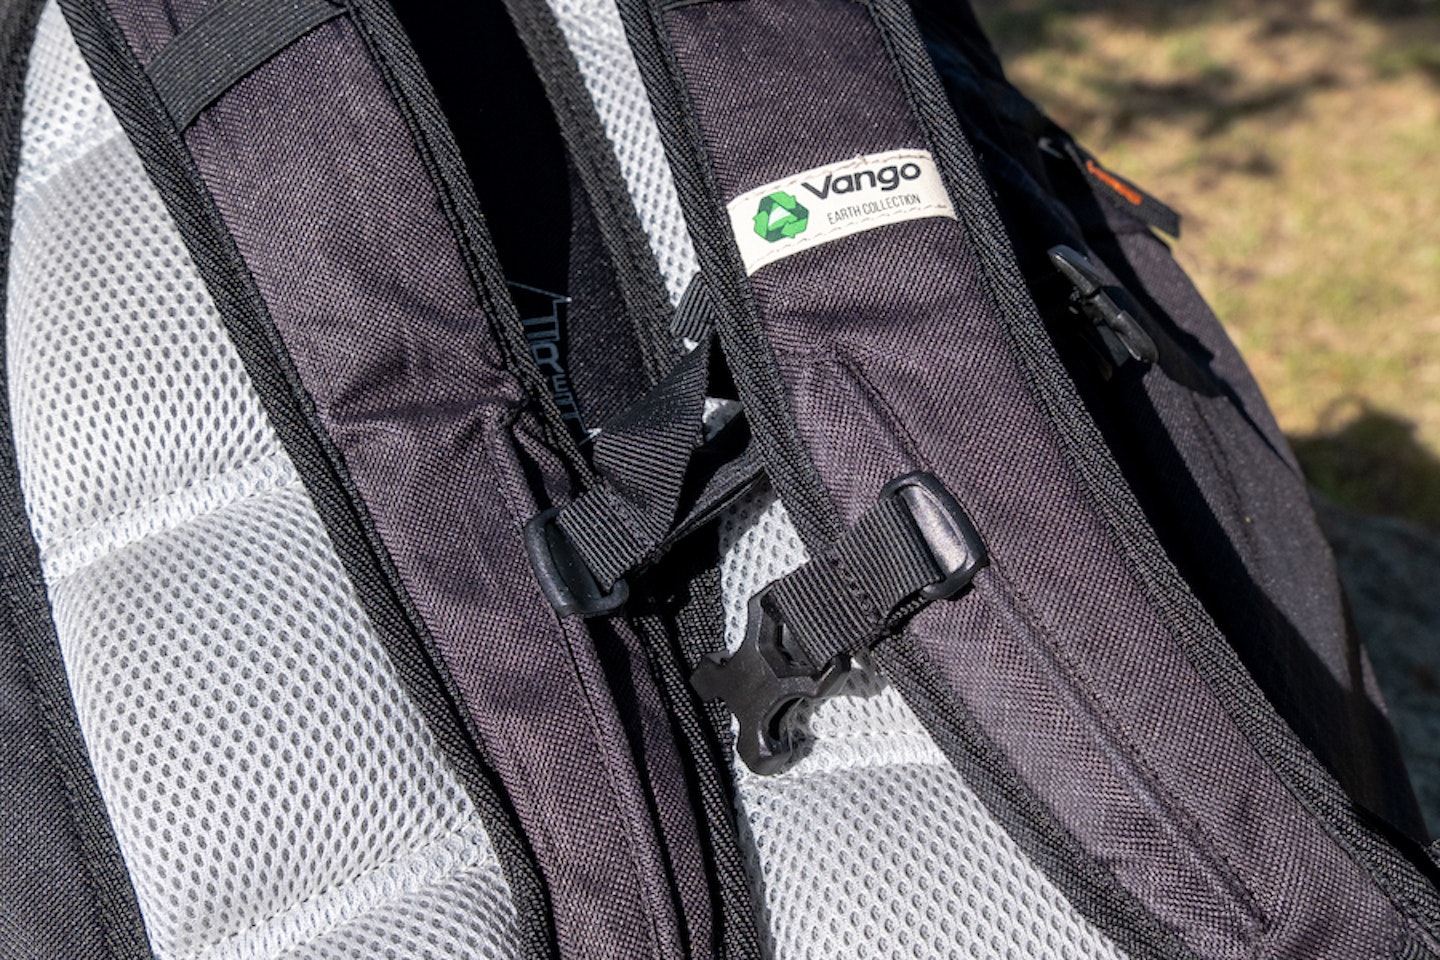 Vango Trail 35 sternum strap